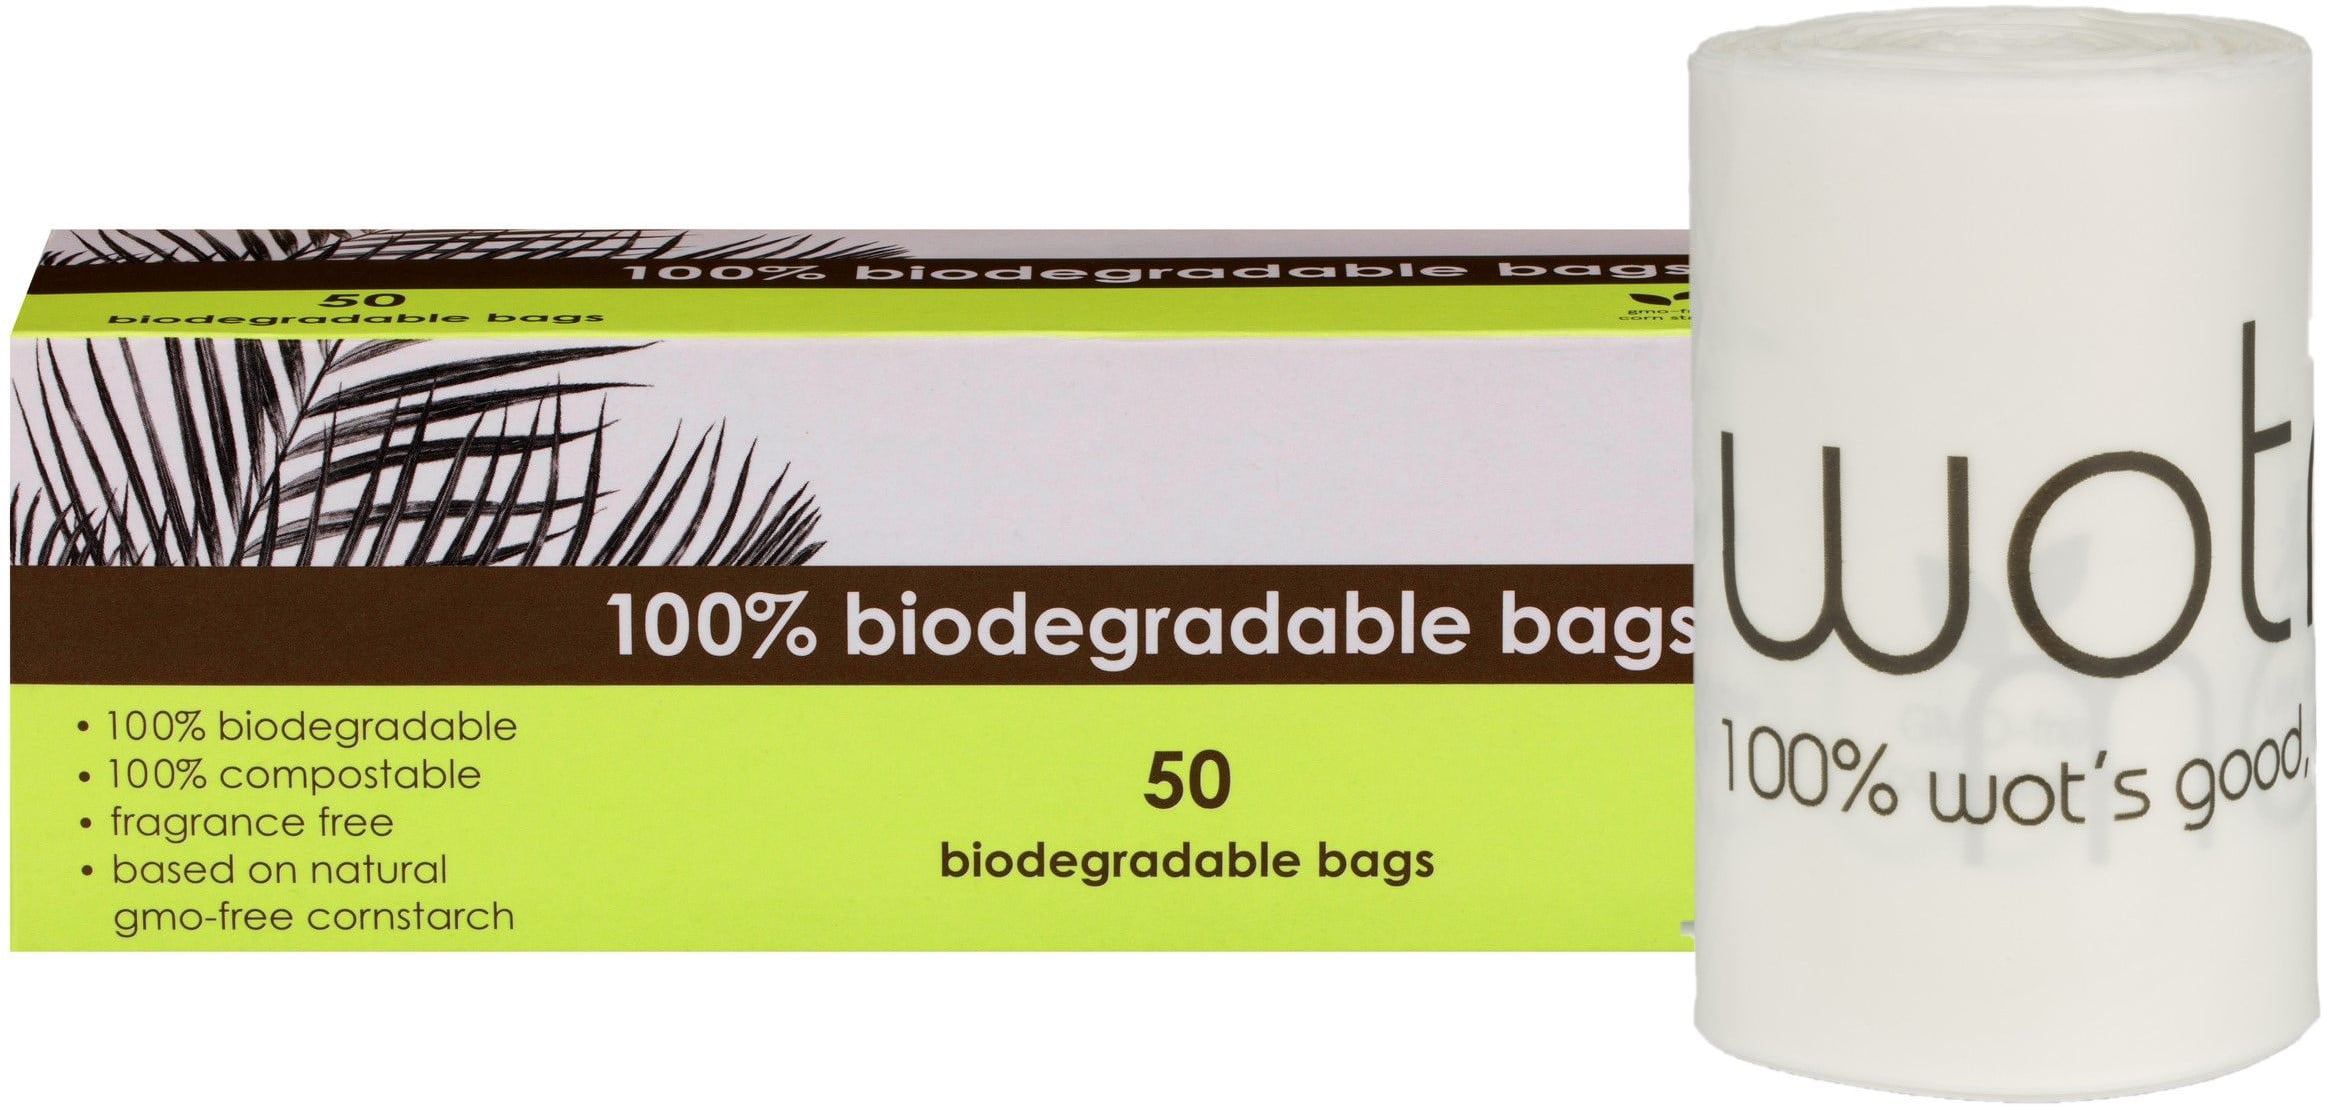 WOTNOT Biodegradable Multi Purpose Bags Nappy Pet Compost Waste bag 50pk 